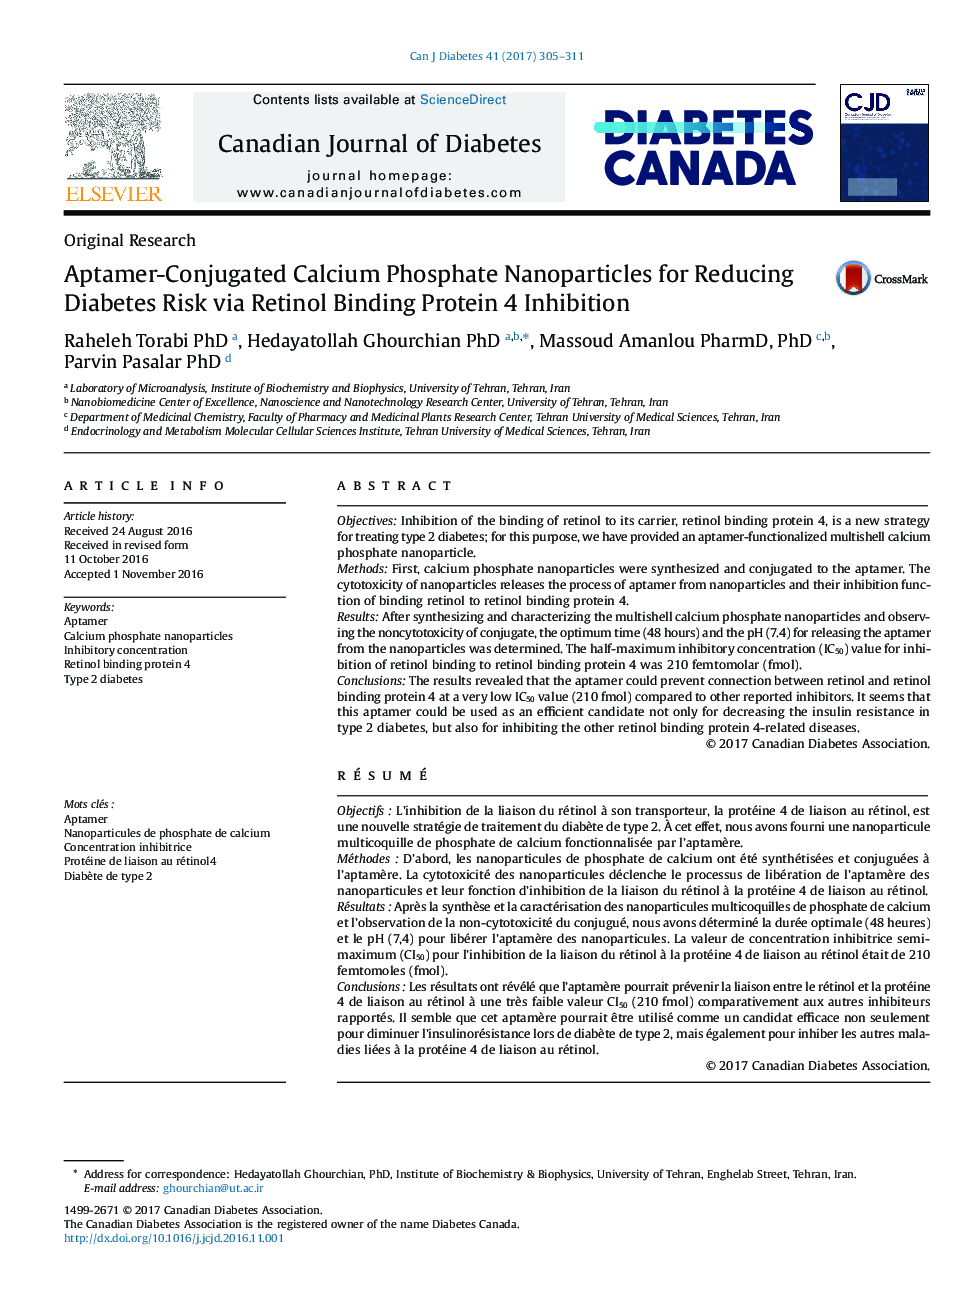 Aptamer-Conjugated Calcium Phosphate Nanoparticles for Reducing Diabetes Risk via Retinol Binding Protein 4 Inhibition